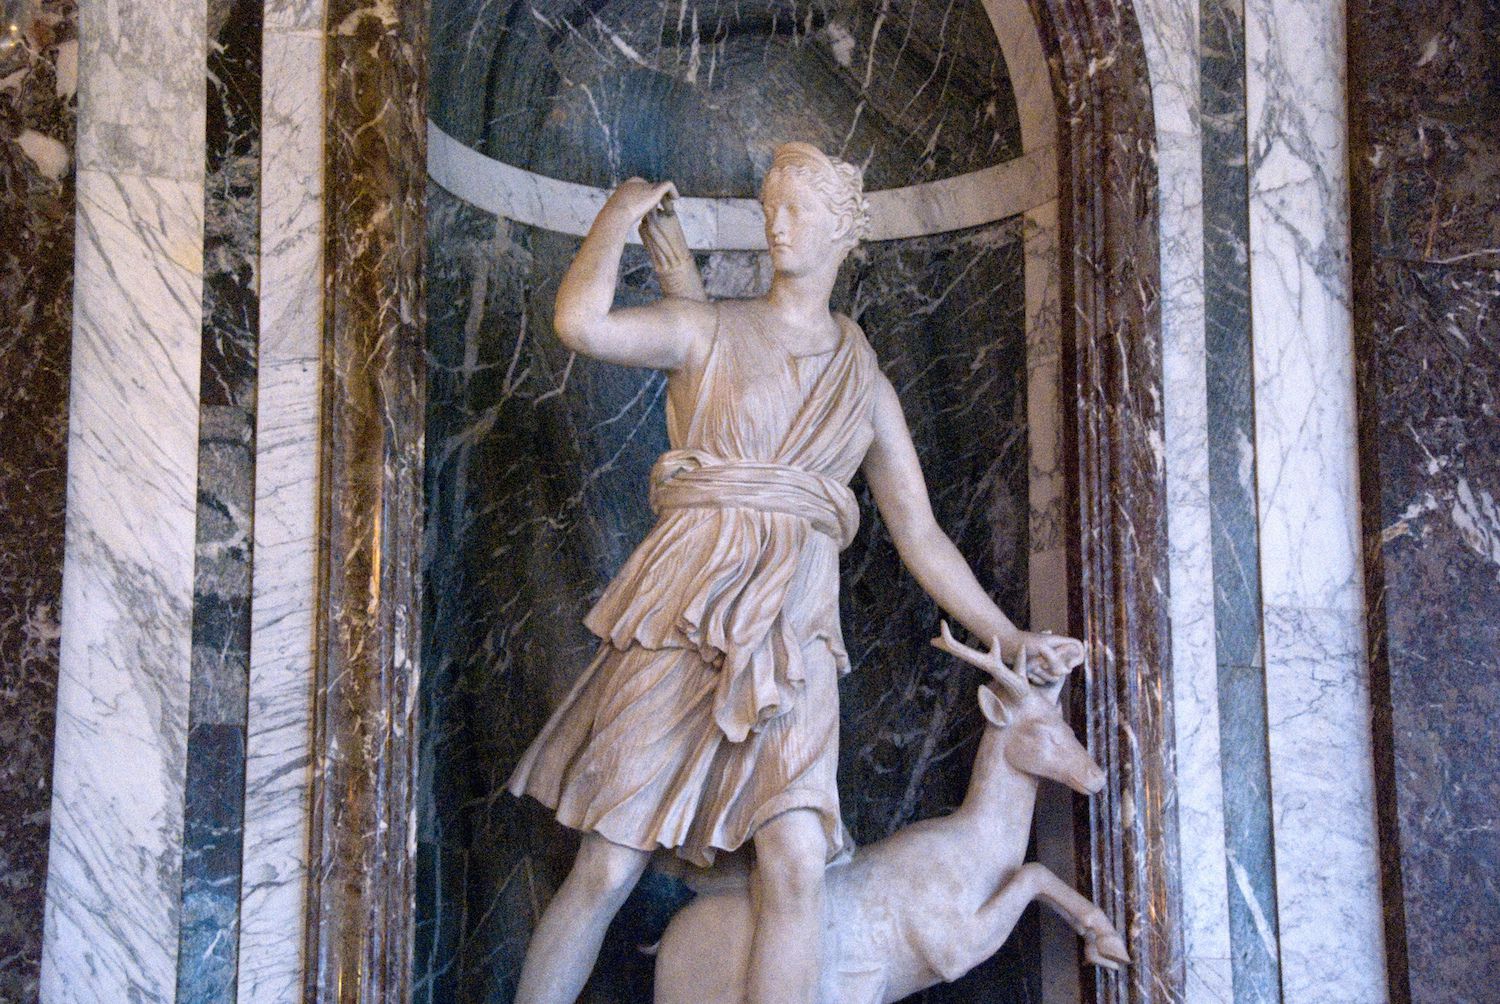 Artemis: Goddess of the Hunt